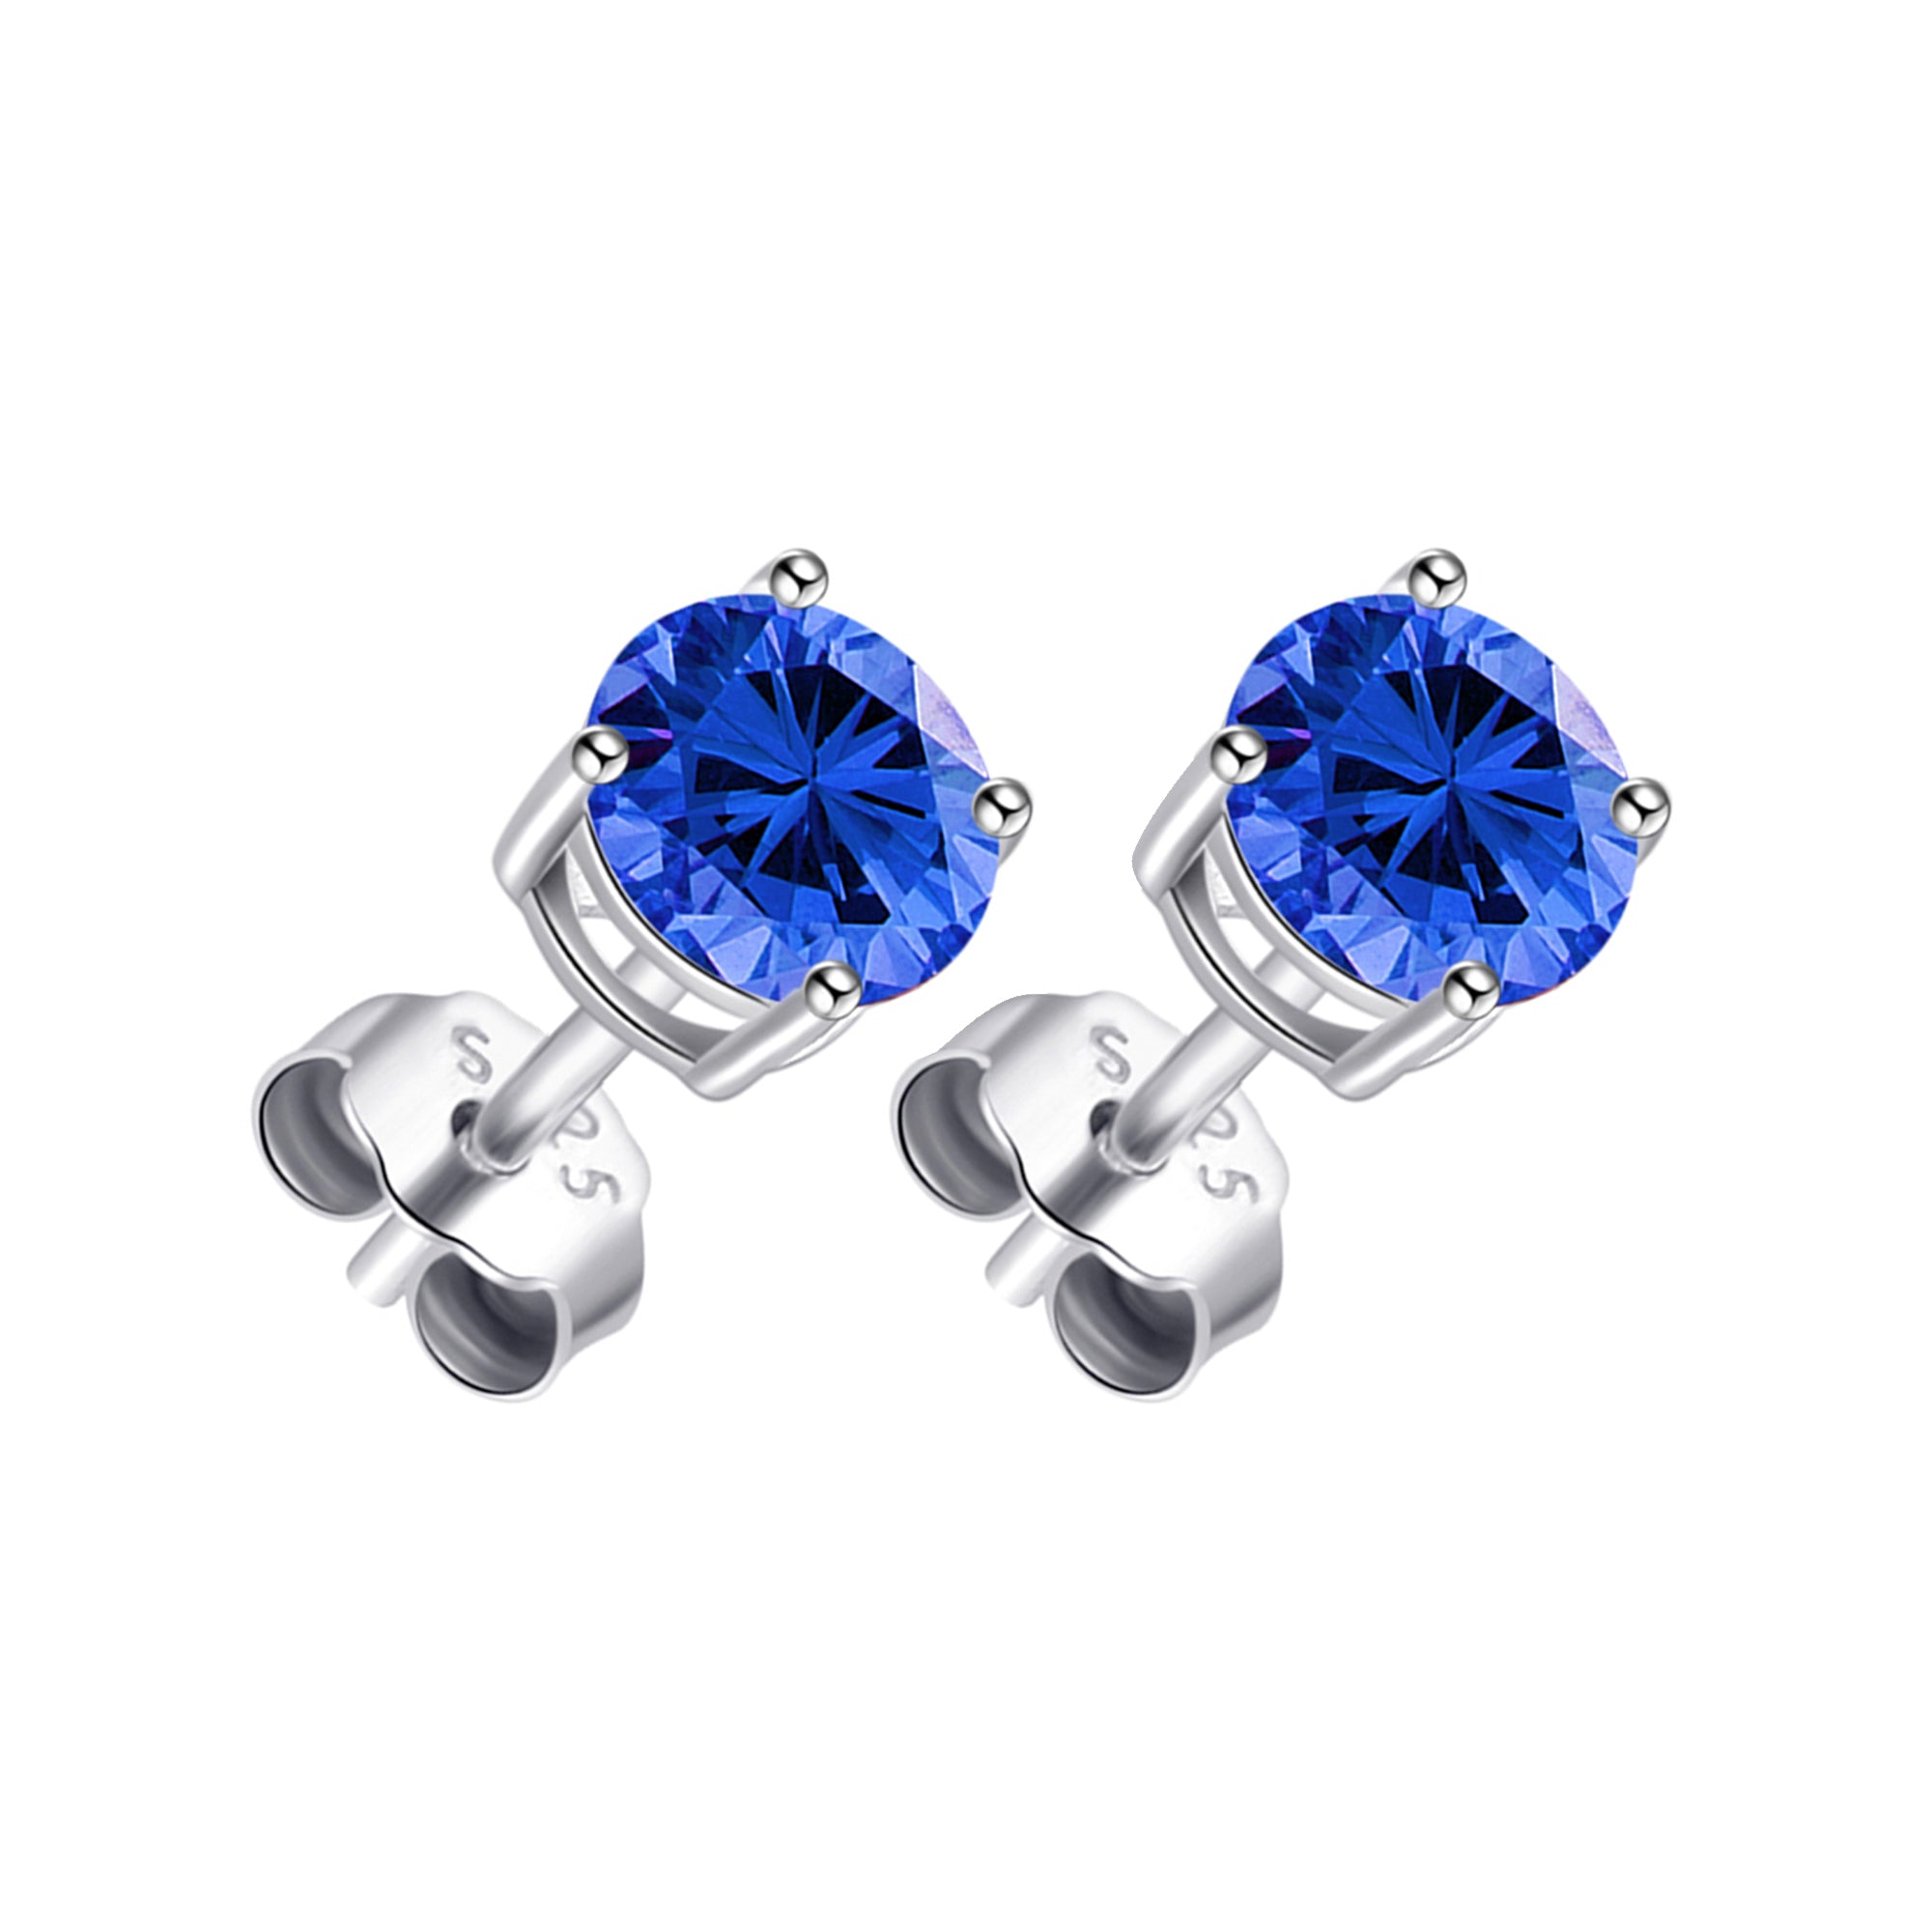 Sterling Silver Dark Blue Earrings Created with Zircondia® Crystals by Philip Jones Jewellery